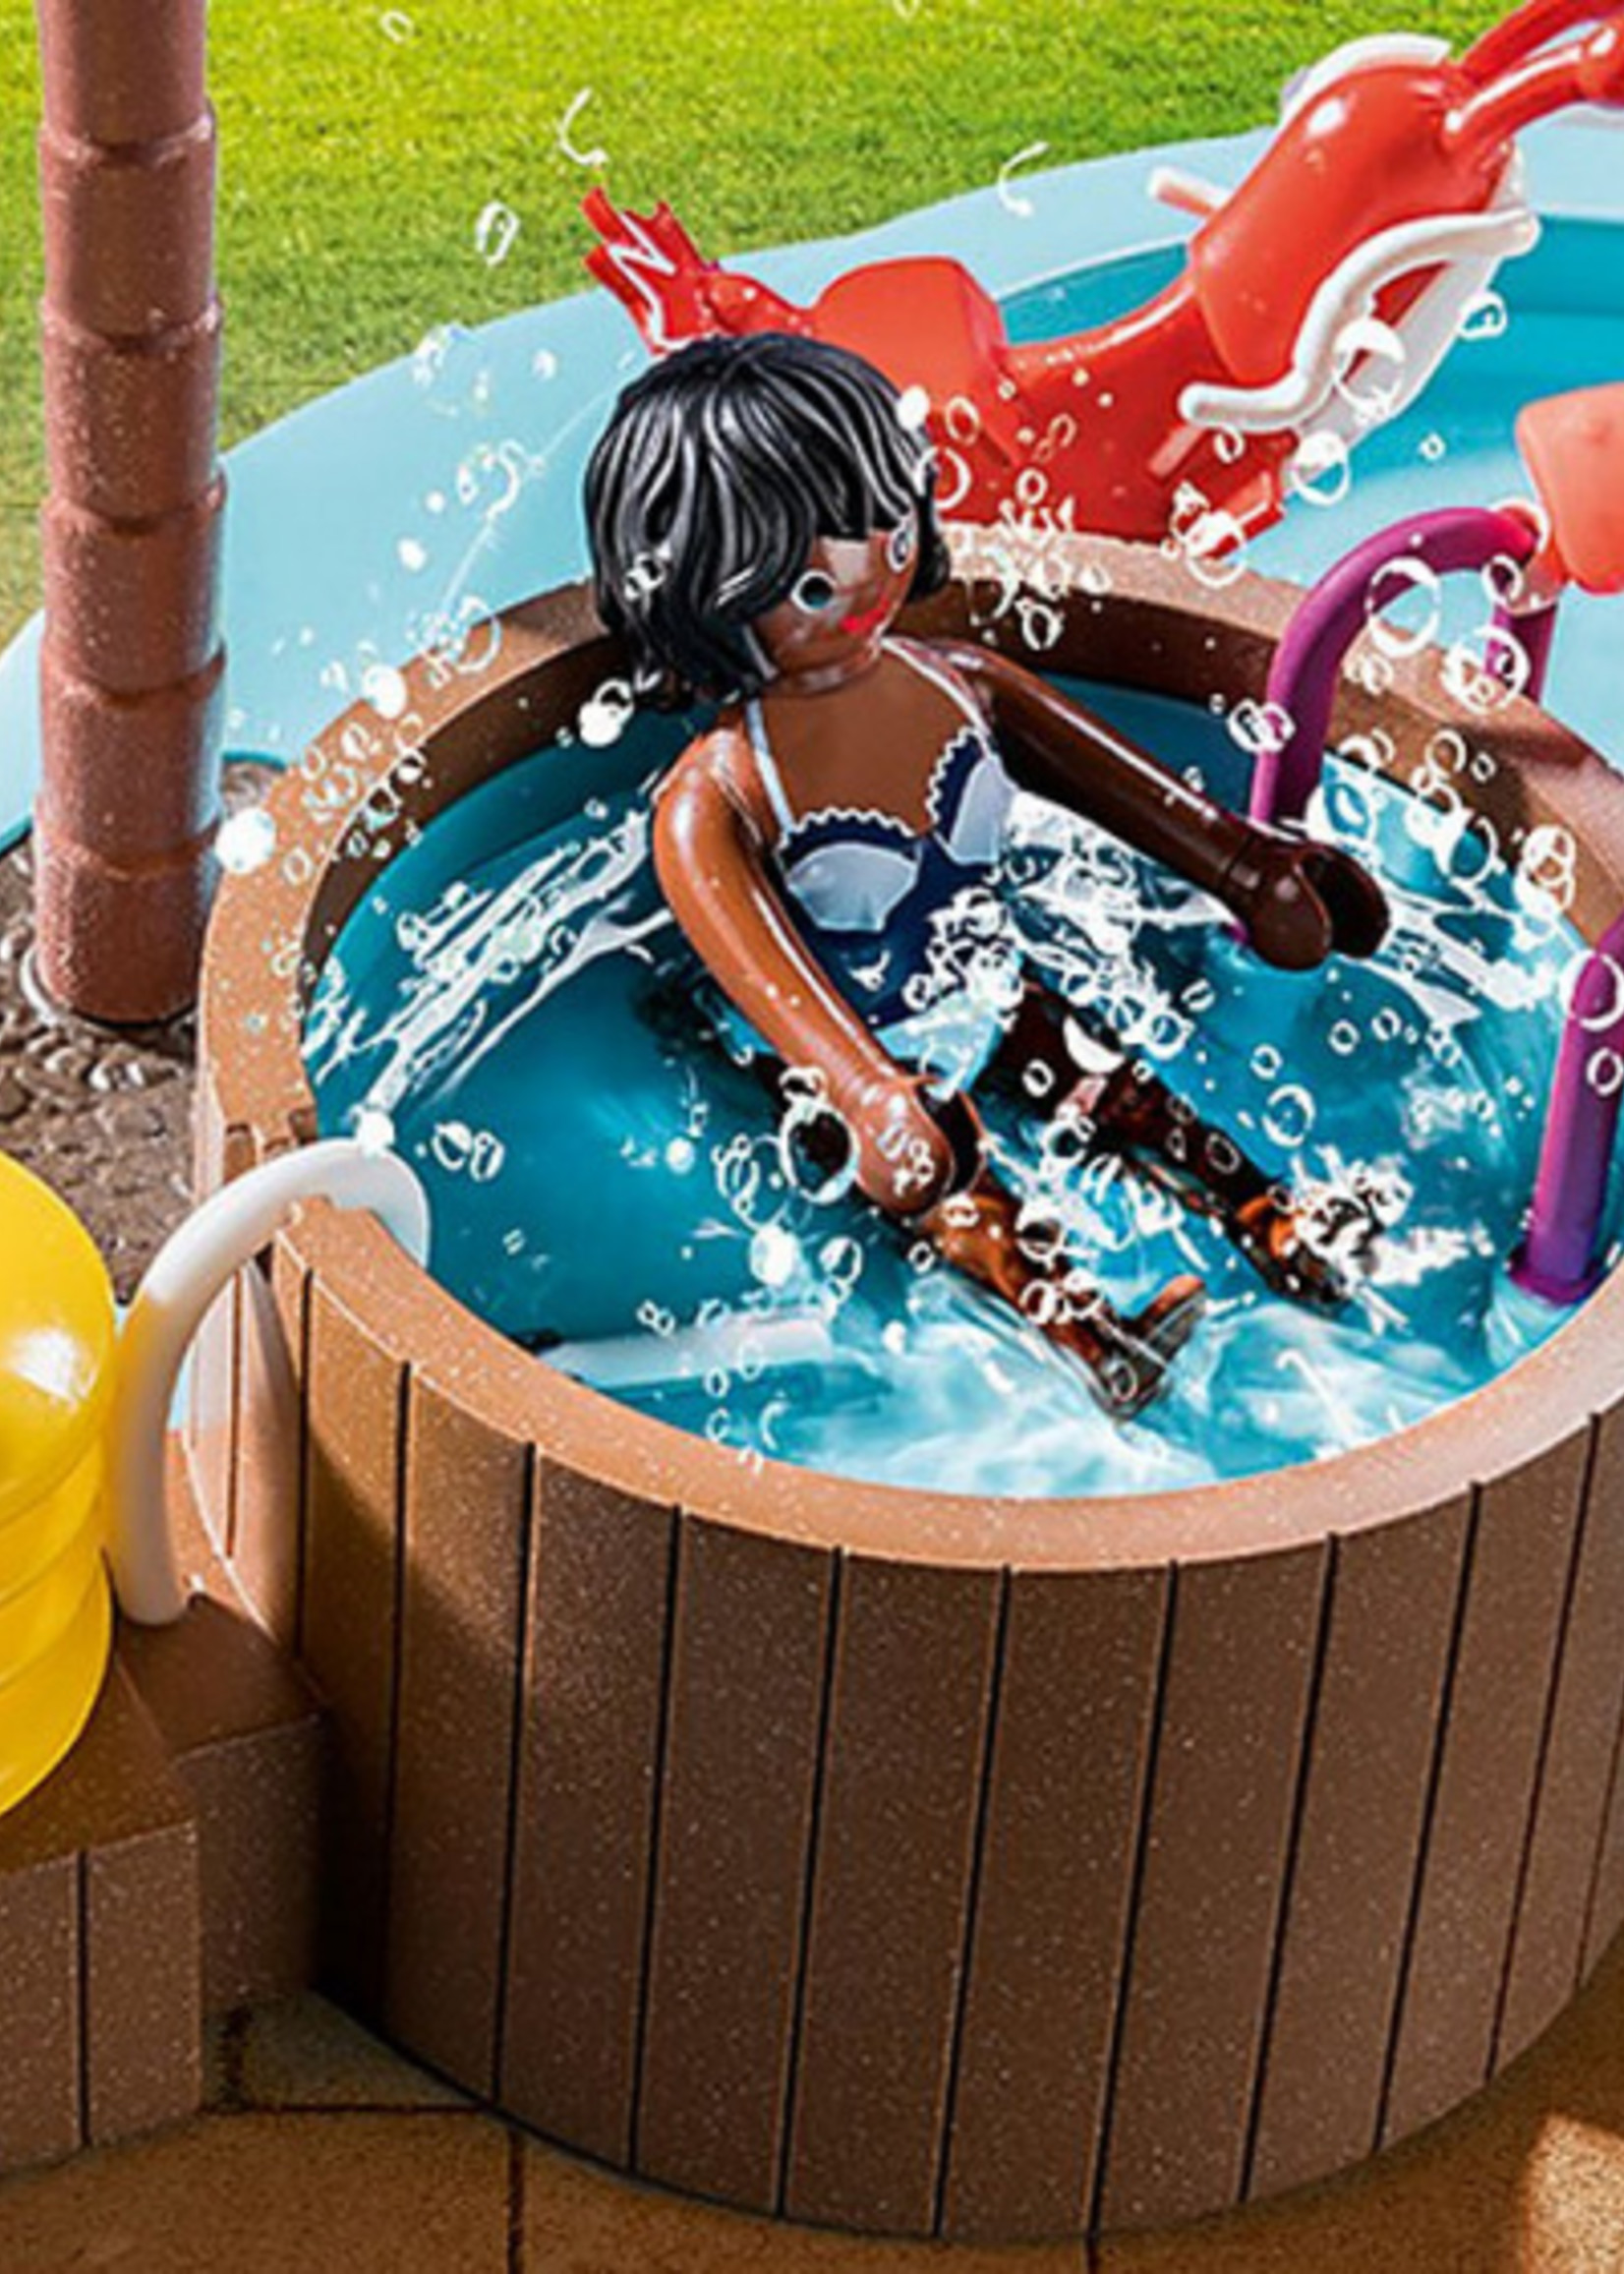 PLAYMOBIL Family Fun - Kinderzwembad met whirlpool (70611)